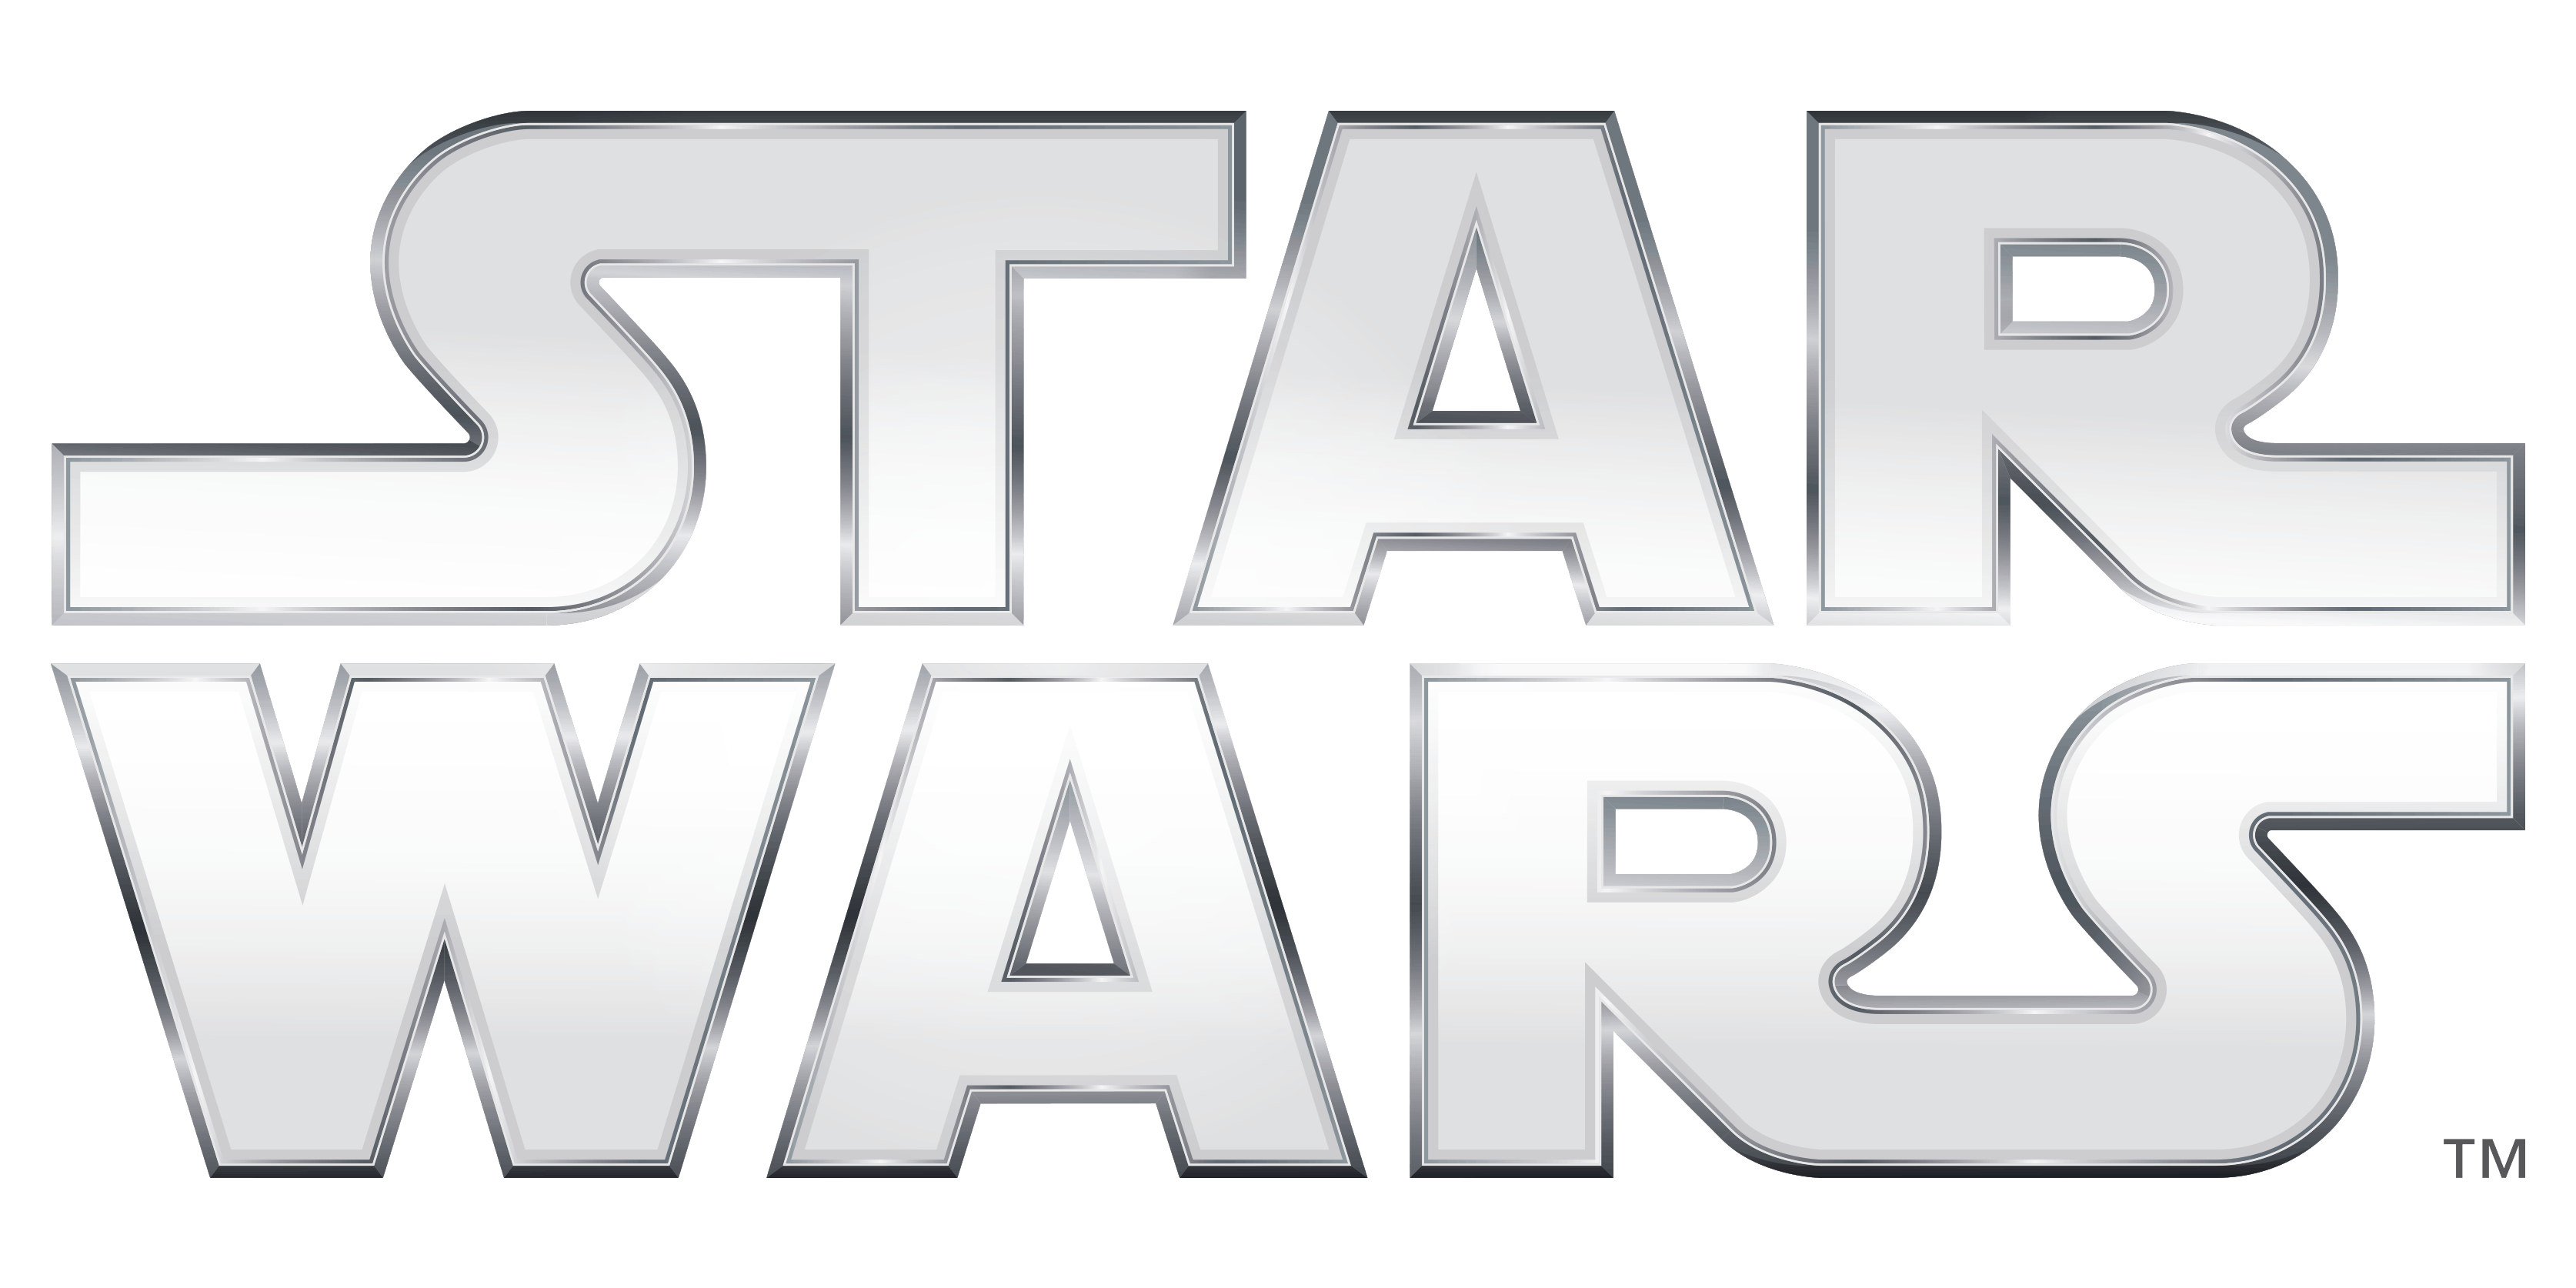 Star Wars: Episode V The Empire Strikes Back // 12:00 PM